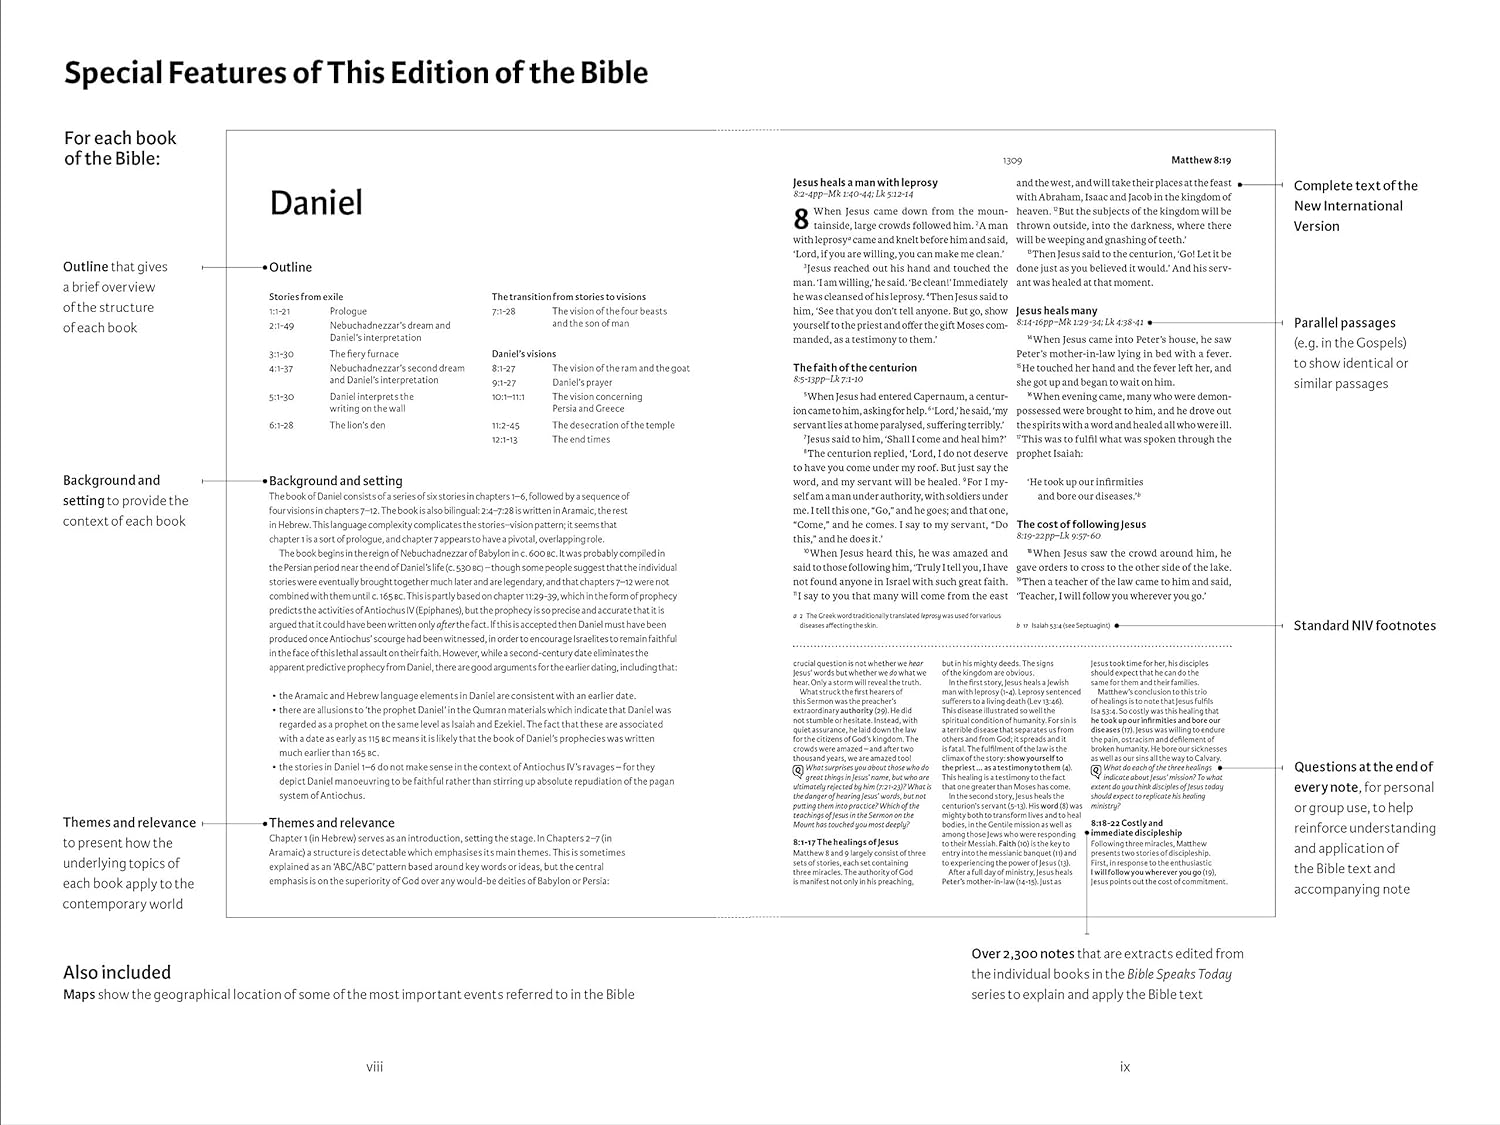 NIV - Bible Speaks Today Study Bible, Hardcover